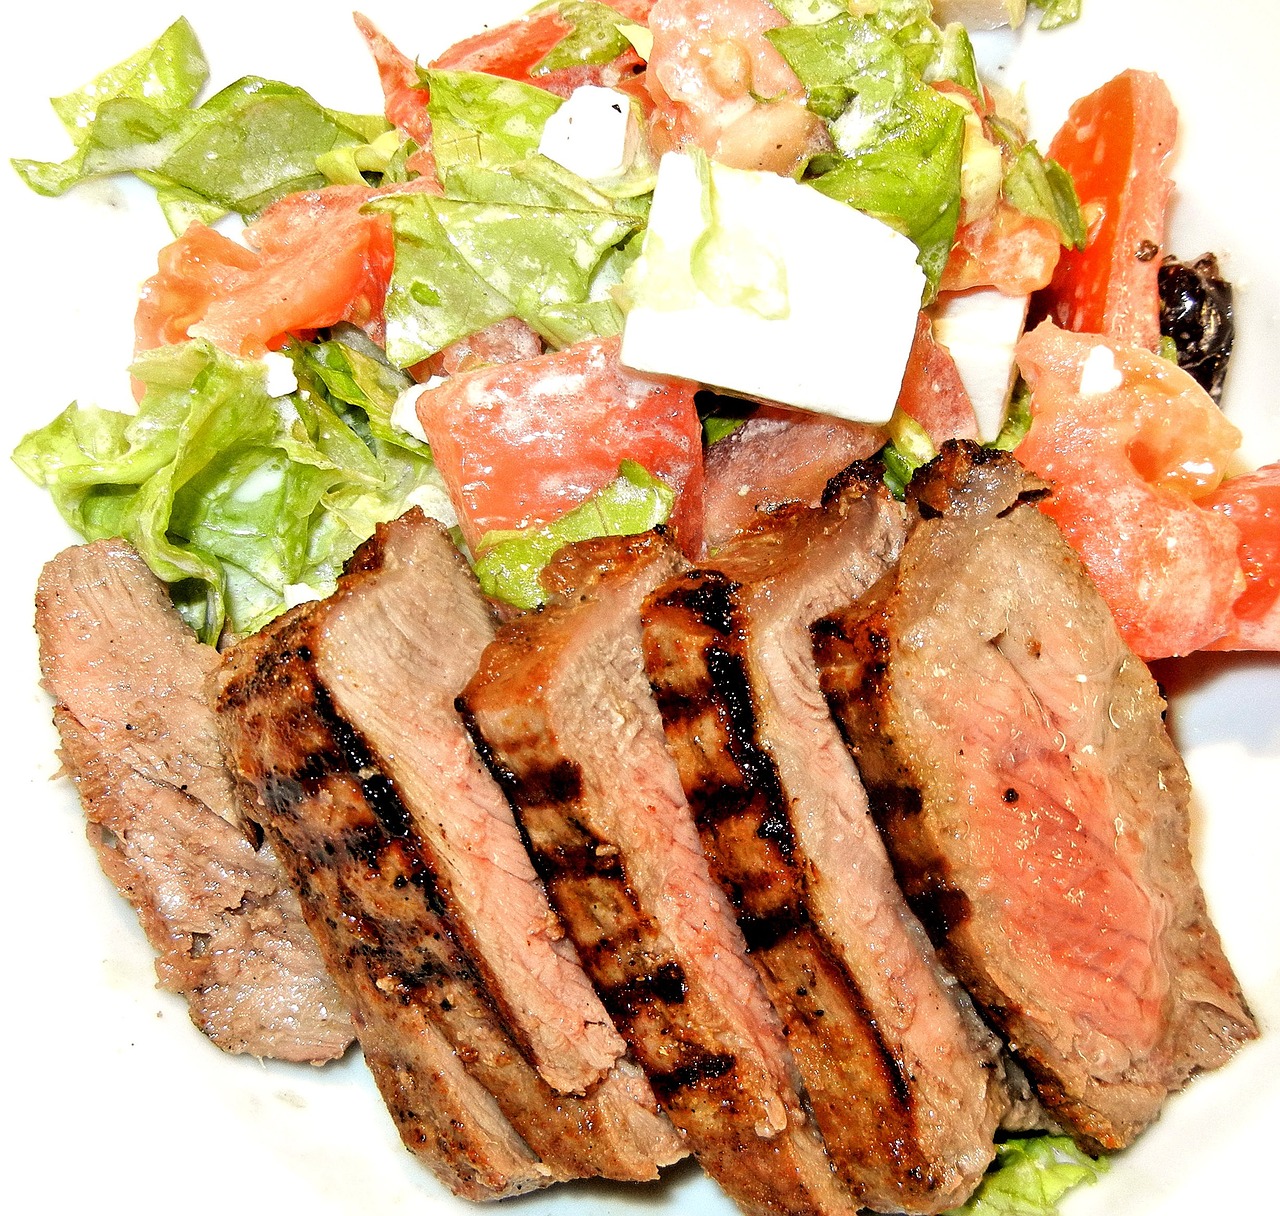 Texas Style Sliced Steak